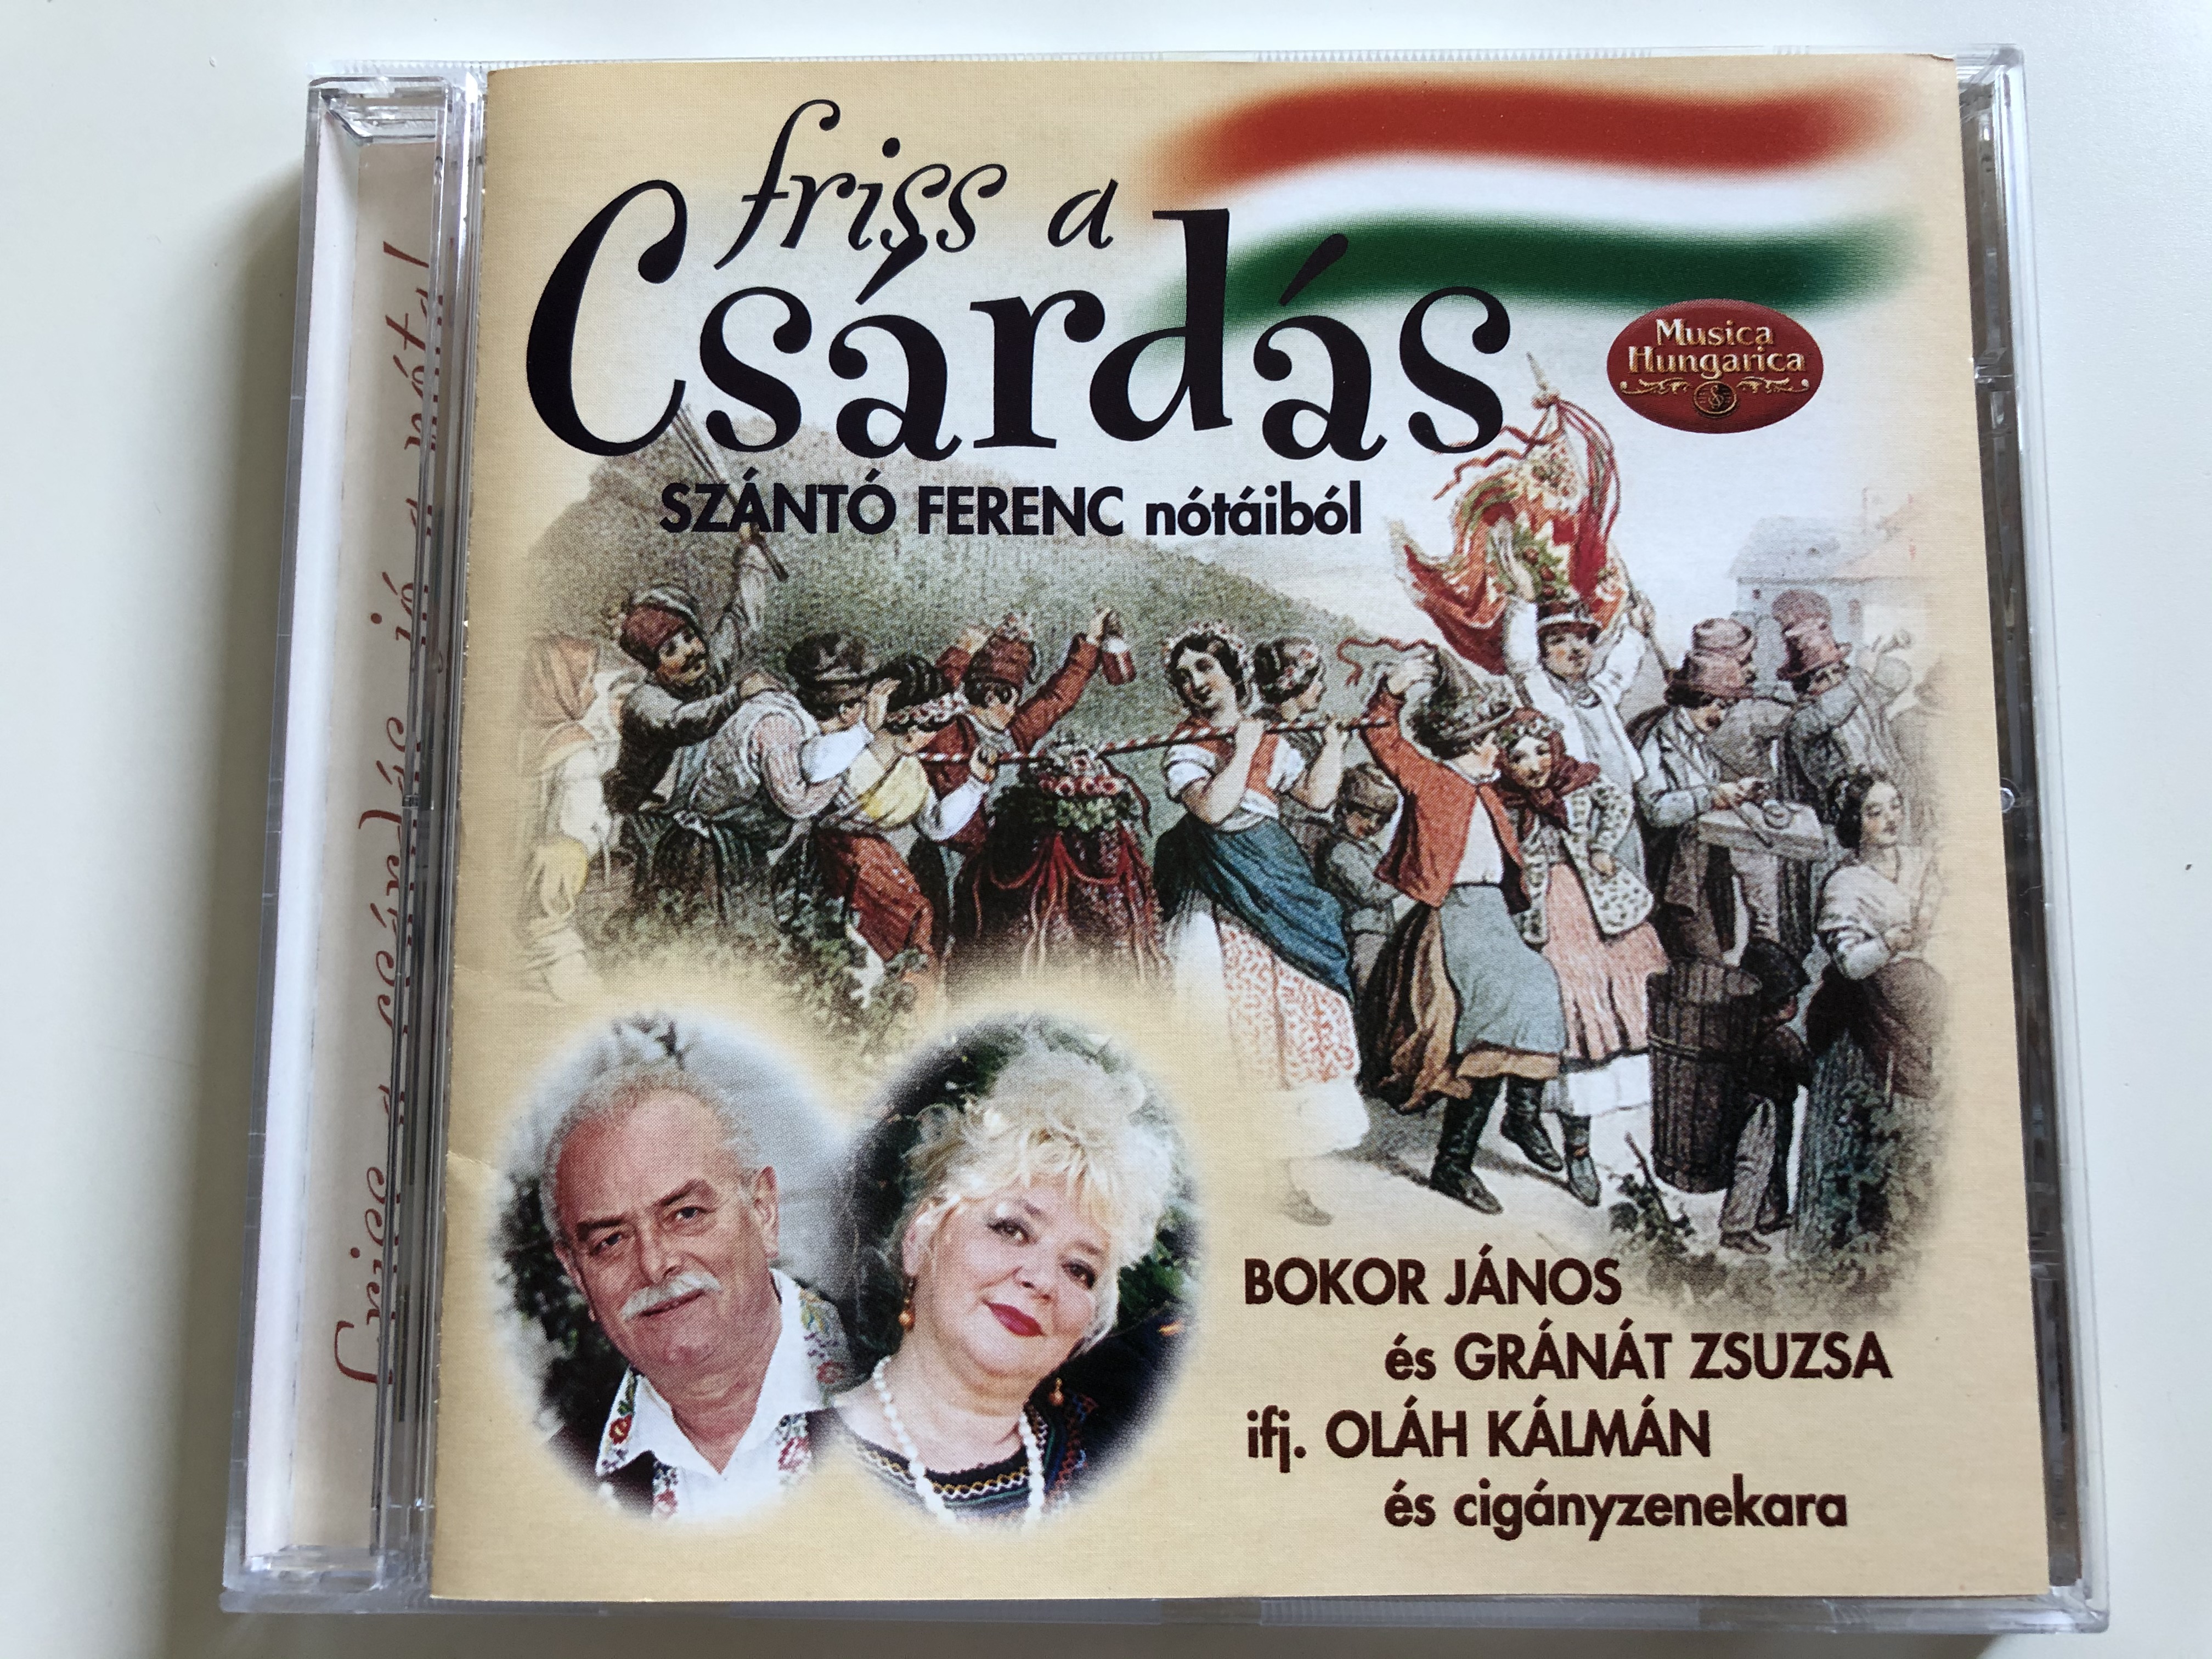 friss-a-csardas-szanto-ferenc-notaibol-bokor-janos-es-granat-zsuzsa-ifj.-olah-kalman-es-ciganyzenekara-musica-hungarica-audio-cd-2004-stereo-mha-462-1-.jpg